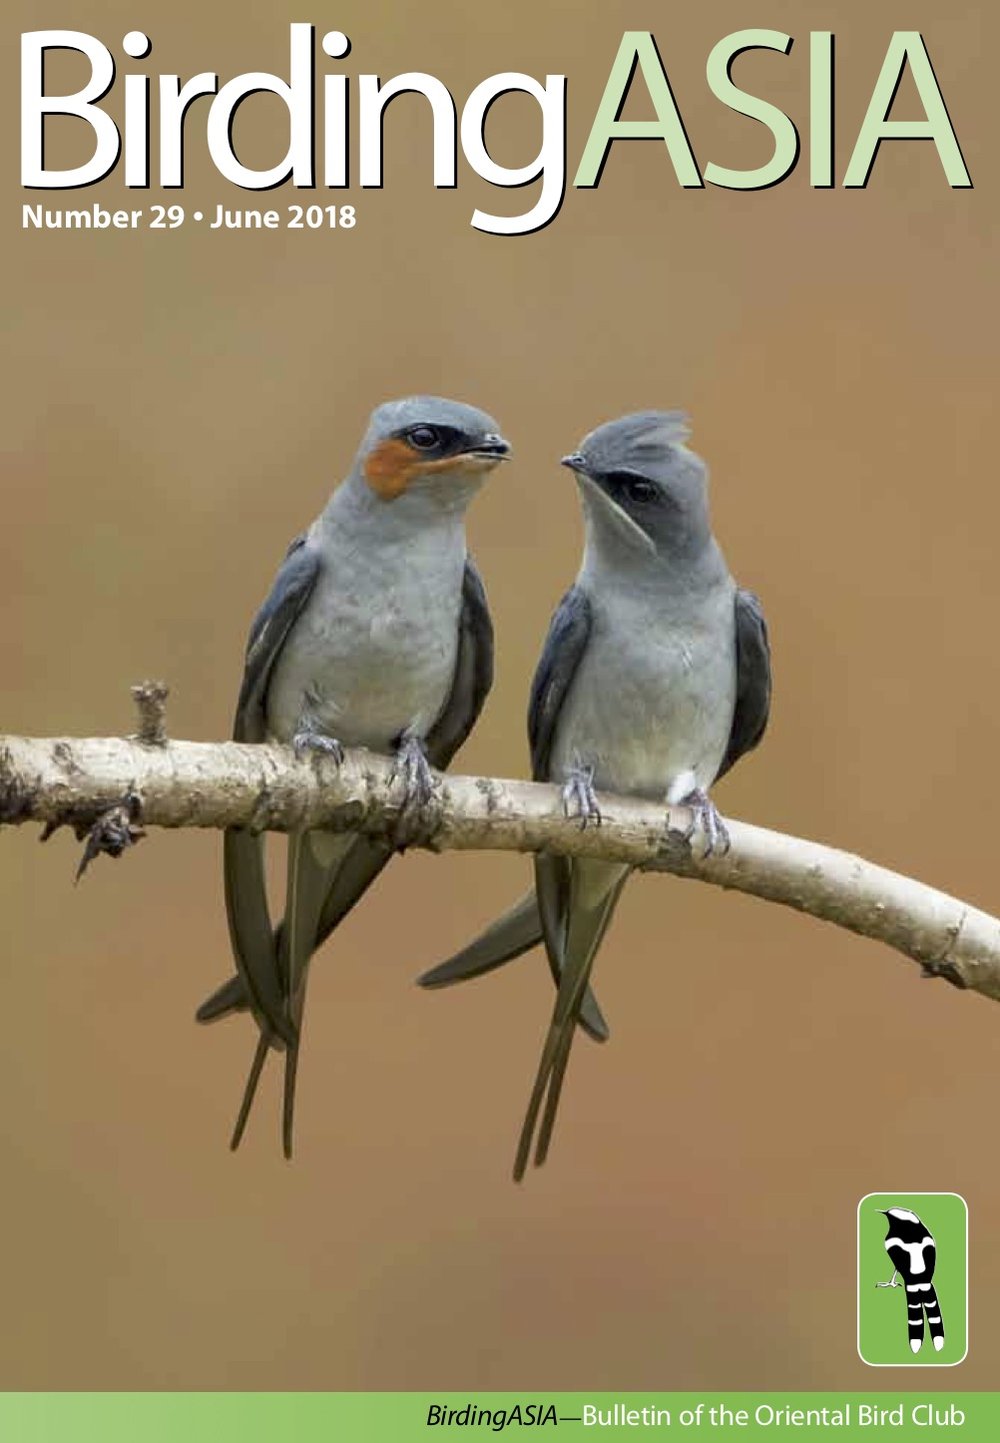 BirdingASIA 29 — Oriental Bird Club